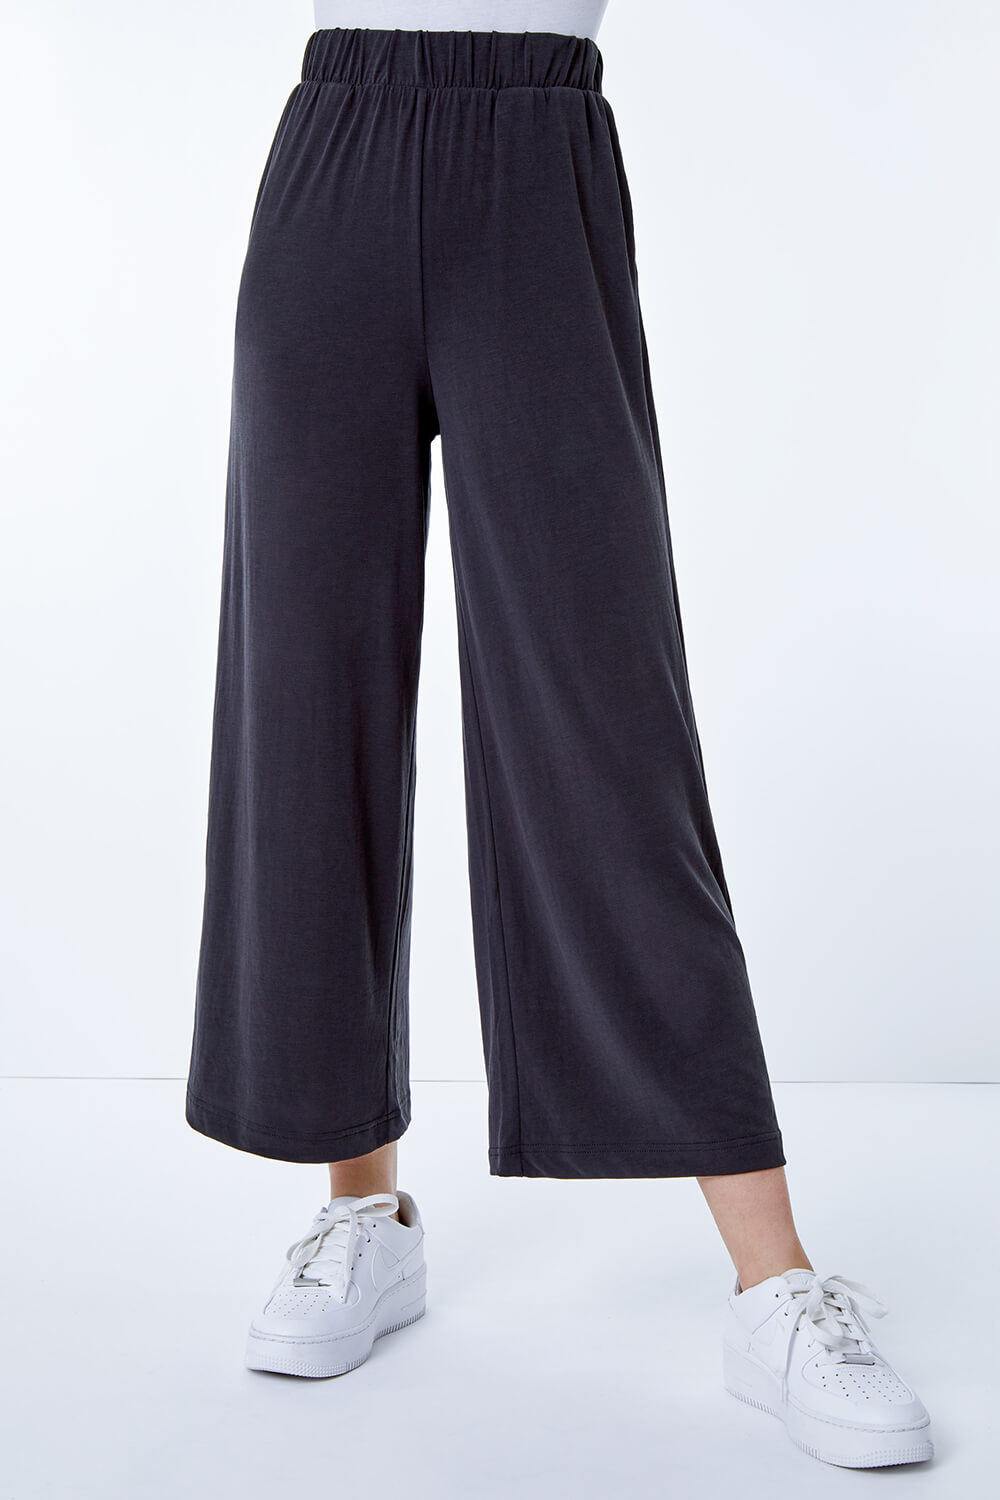 Black Plain Jersey Culotte Trousers, Image 4 of 5